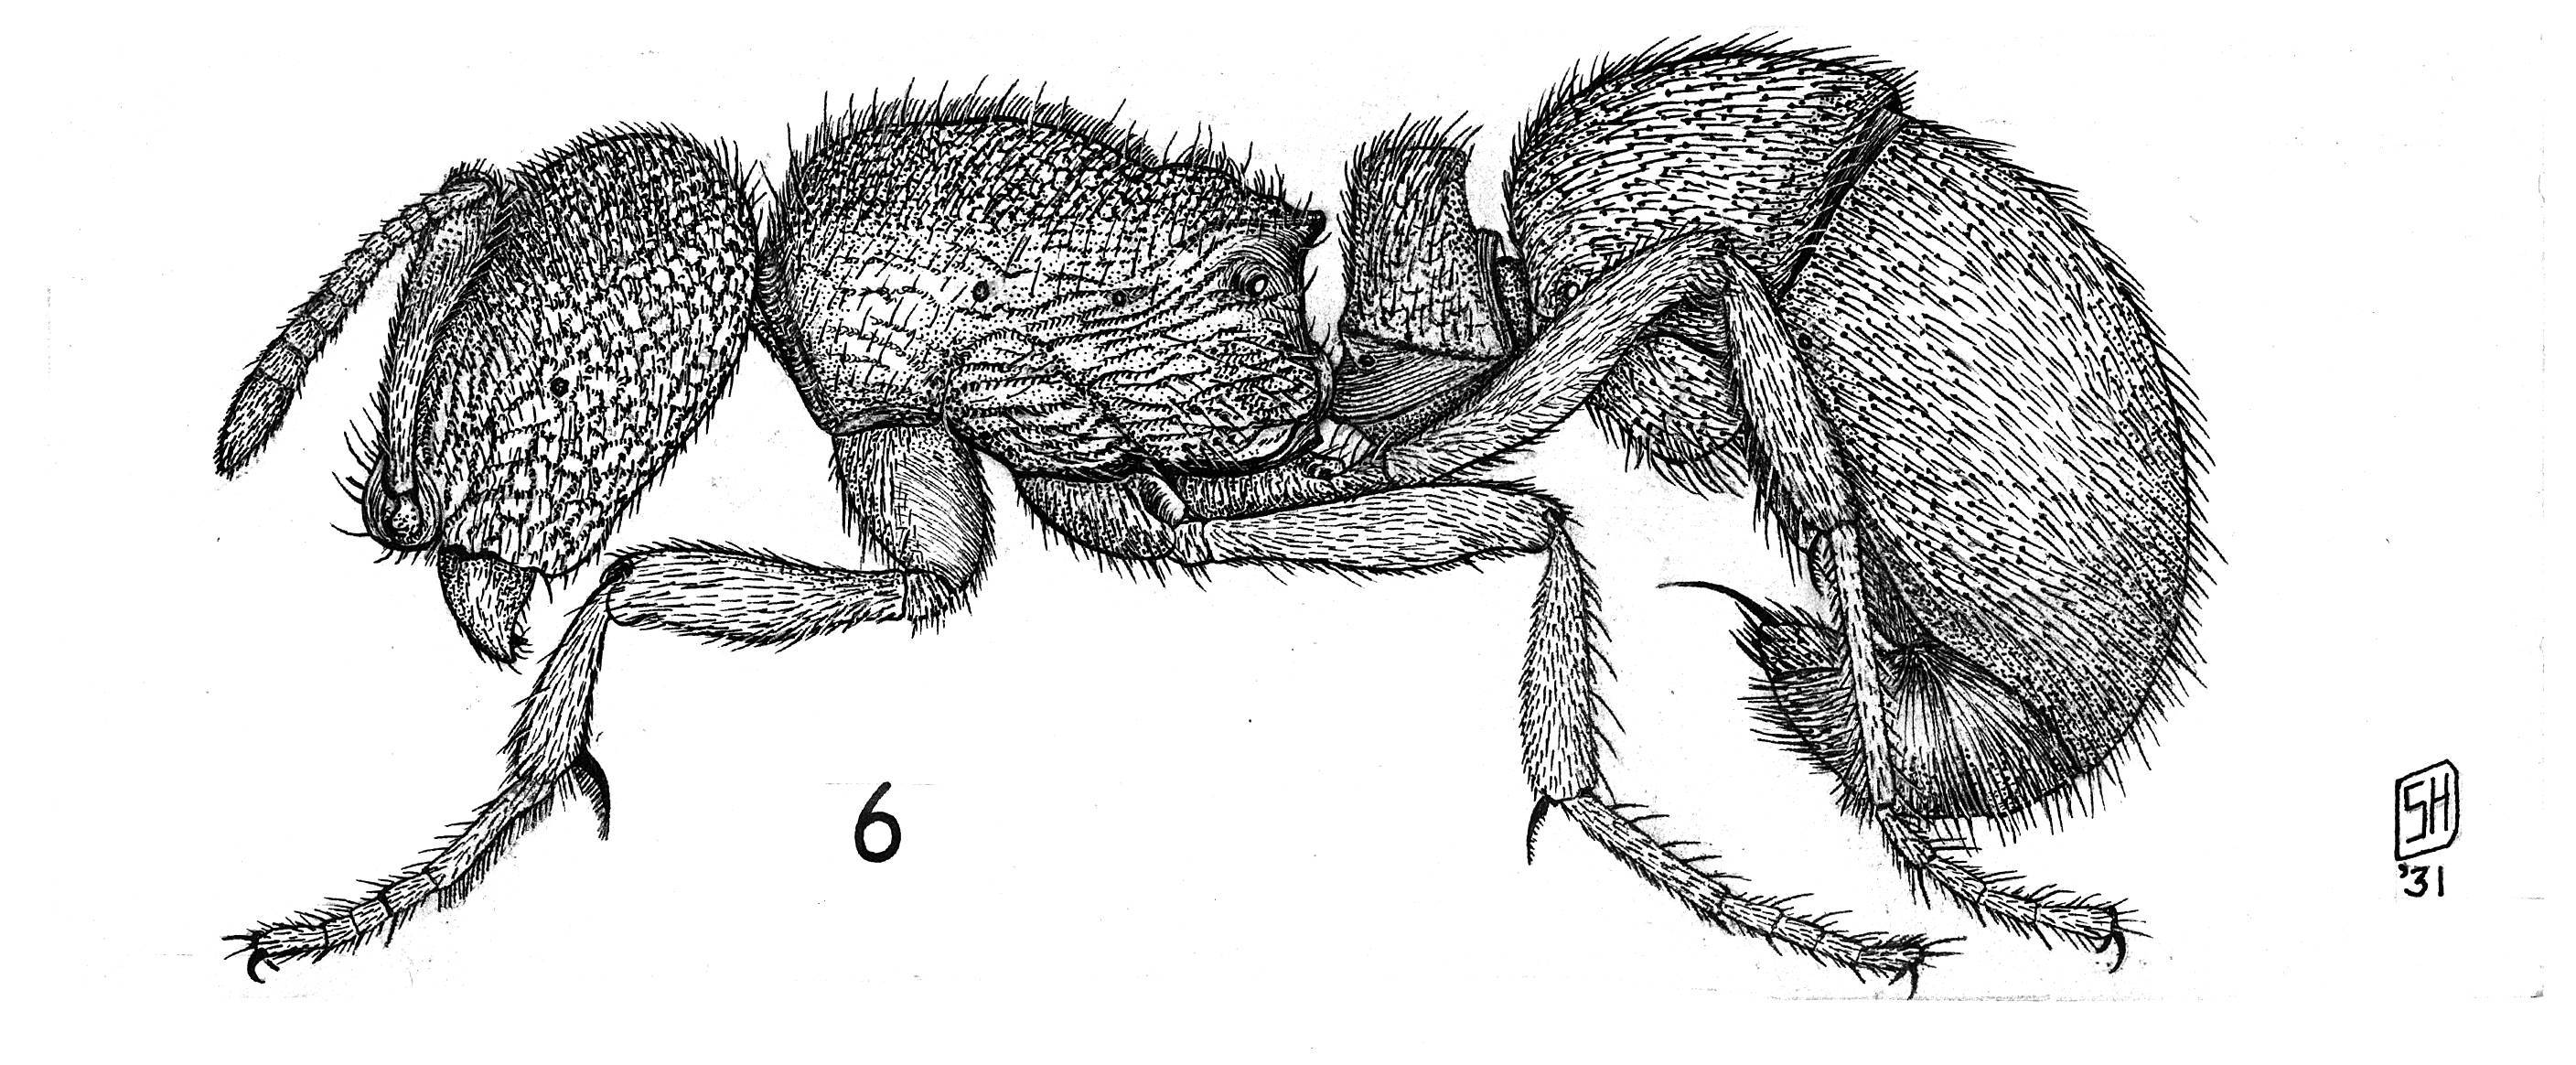 Proceratium croceum (Roger 1860) - Encyclopedia of Life